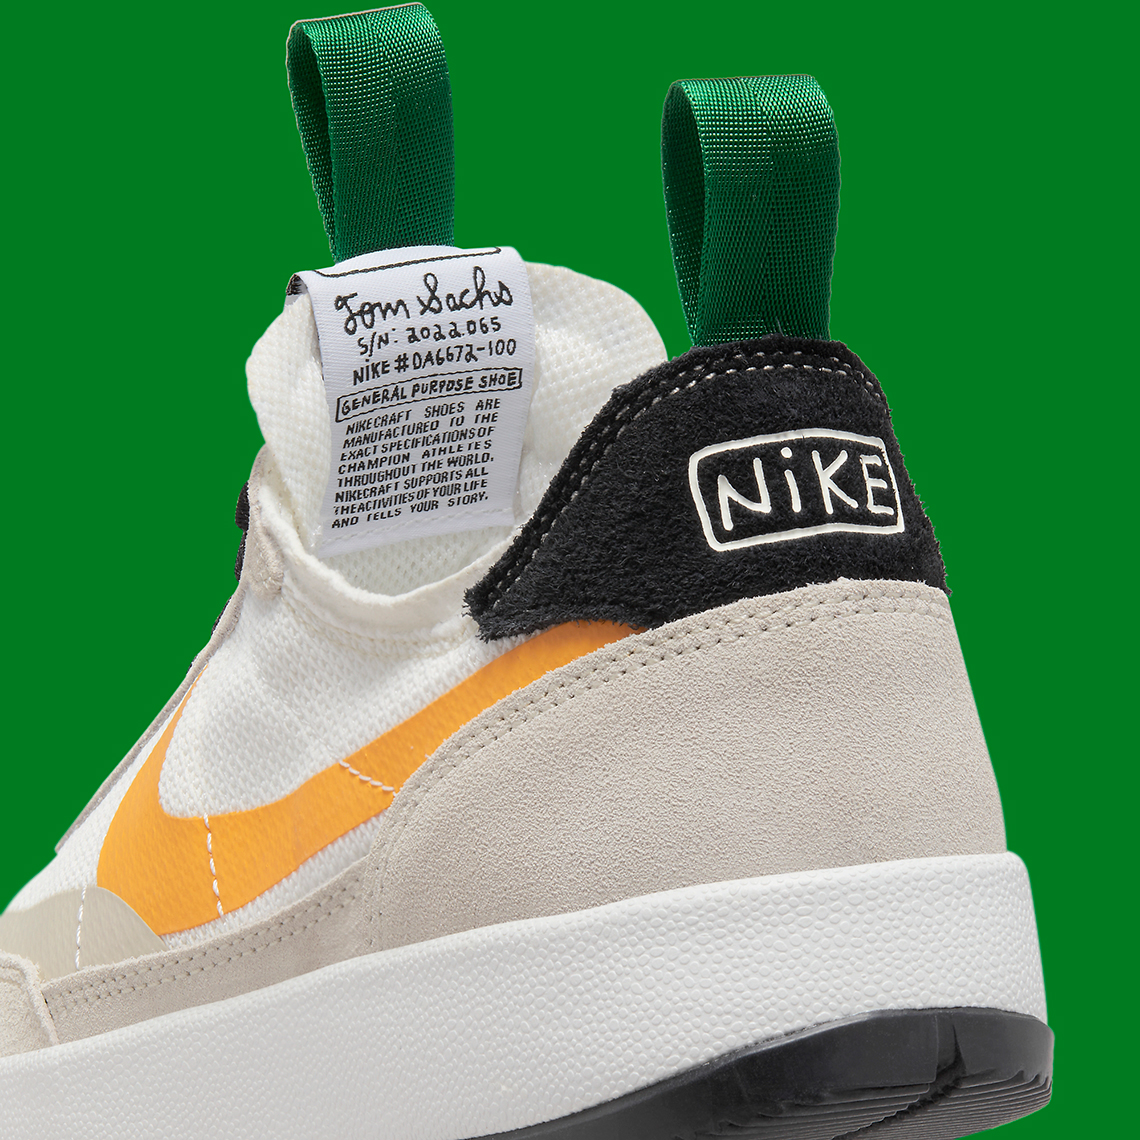 Tom Sachs Nike cheap mens nike air vortex sneakers shoes sale Summit White Pine Green University Gold Da6672 100 4